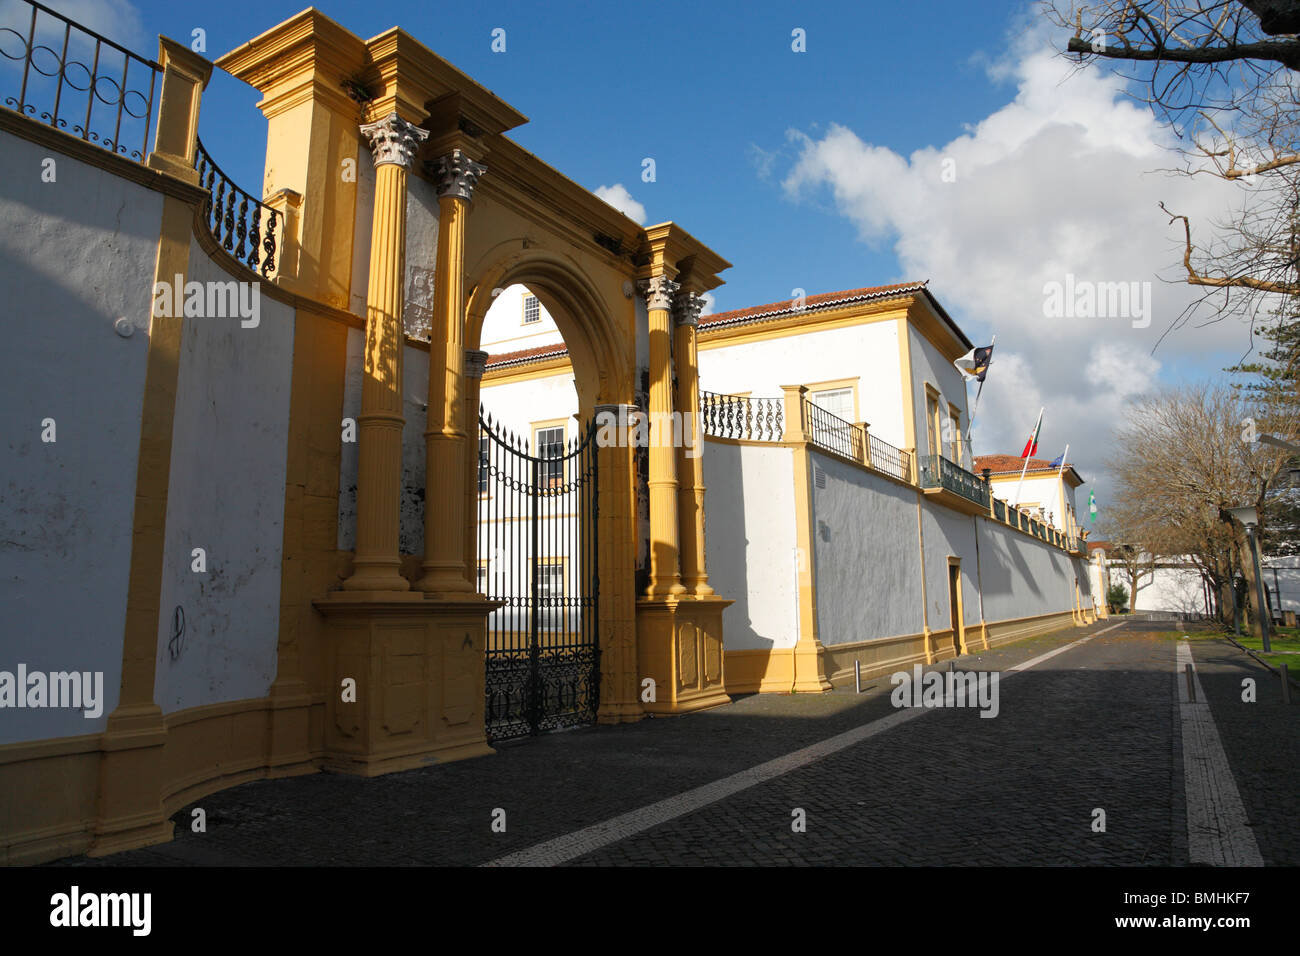 The Fonte Bela Palace, currently the Antero de Quental High School building. Ponta Delgada, Azores islands, Portugal. Stock Photo